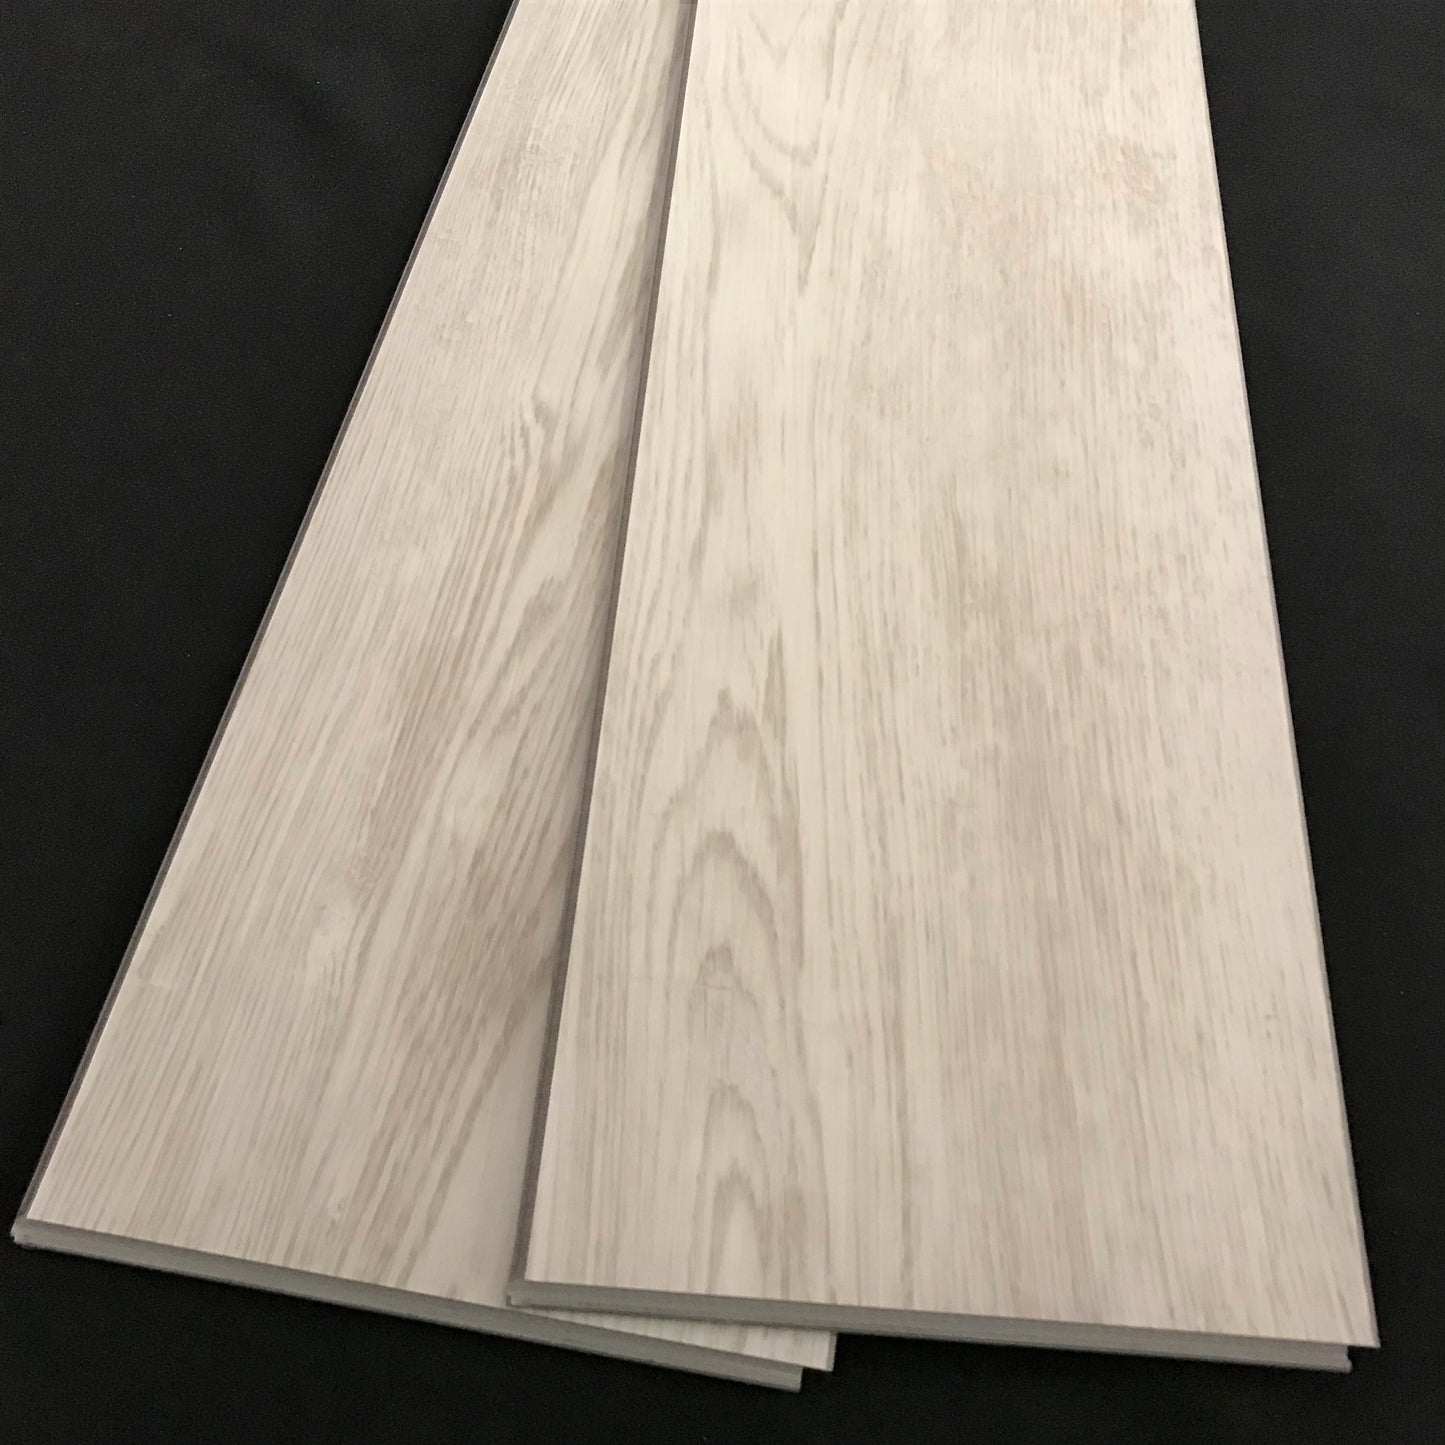 White Oak Vinyl Planks (pad attached) $1.89/sf 23.64 sf/box